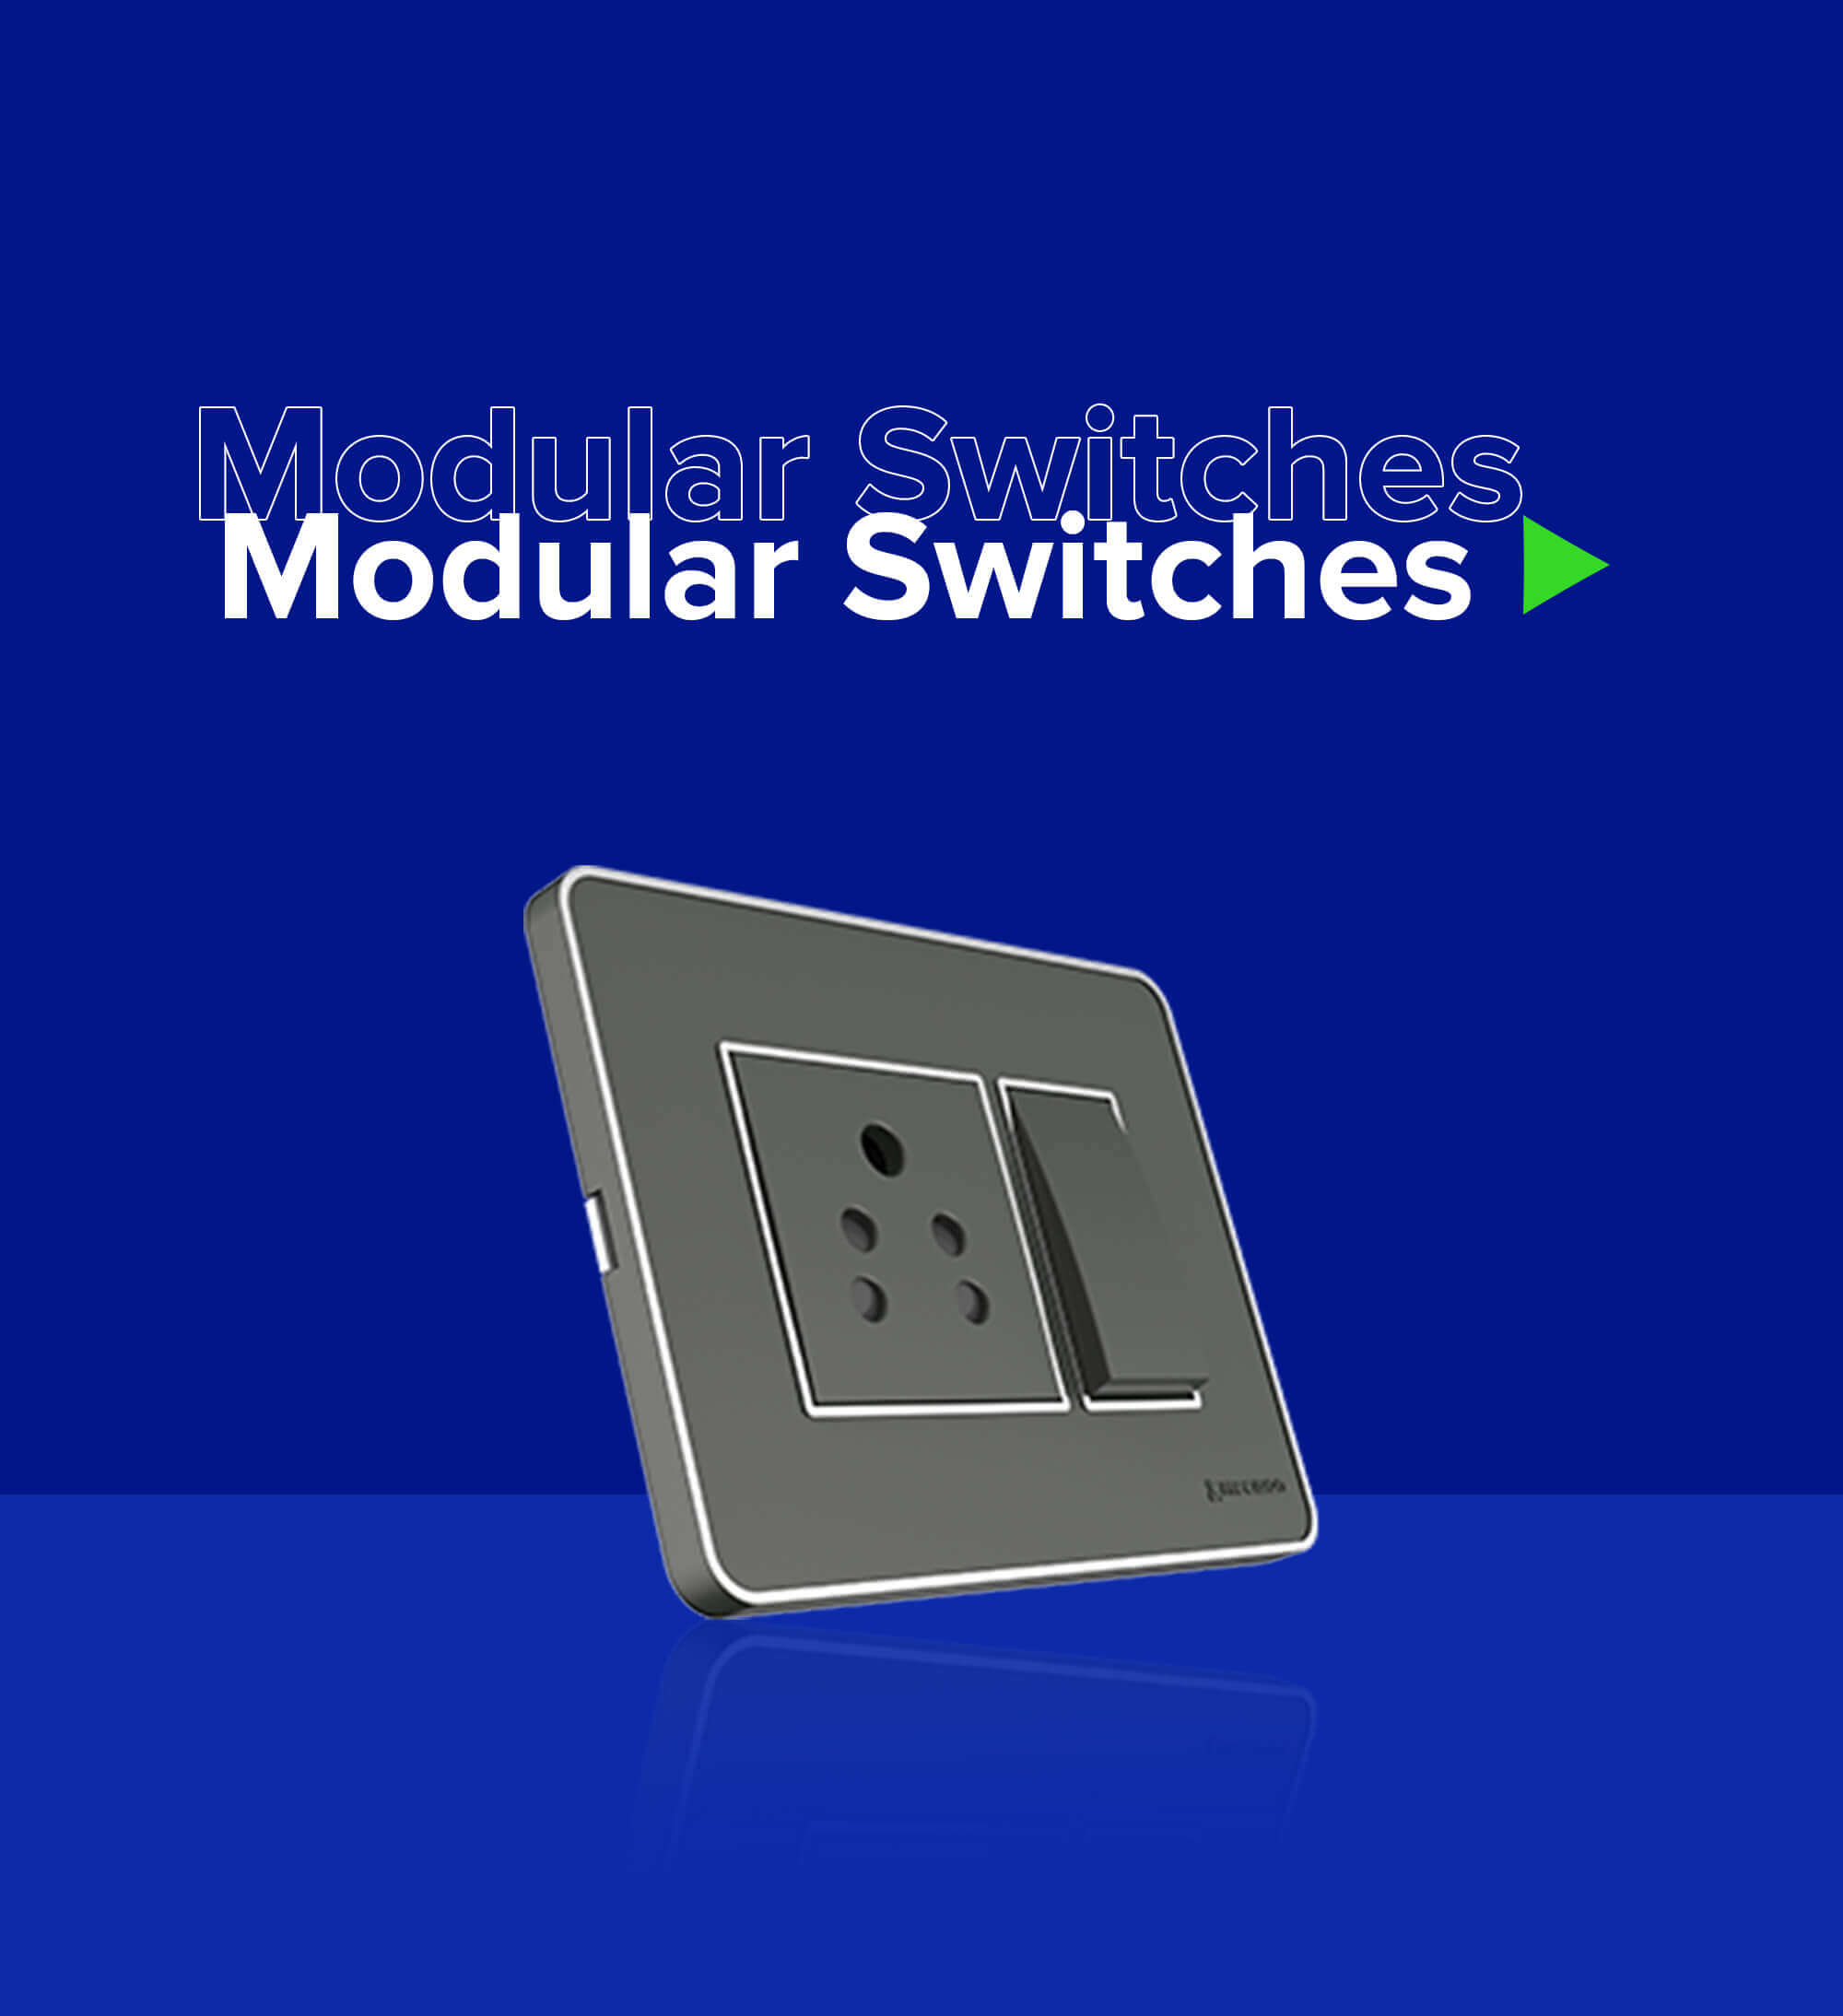 Series 7's Premium Modular Switches and smart Miniature Circuit Breaker